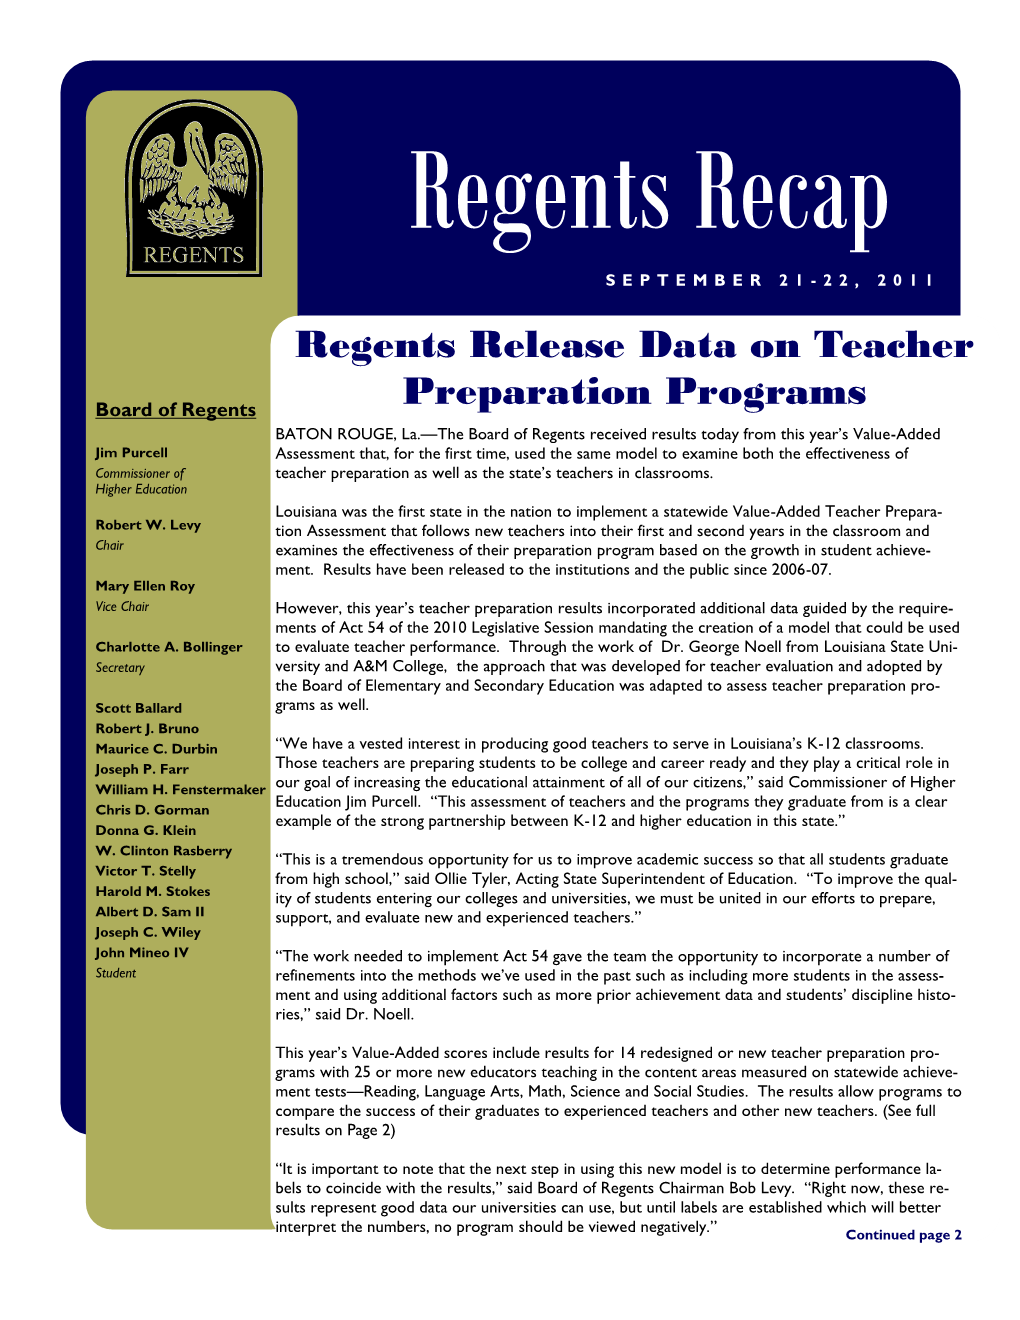 Regents Release Data on Teacher